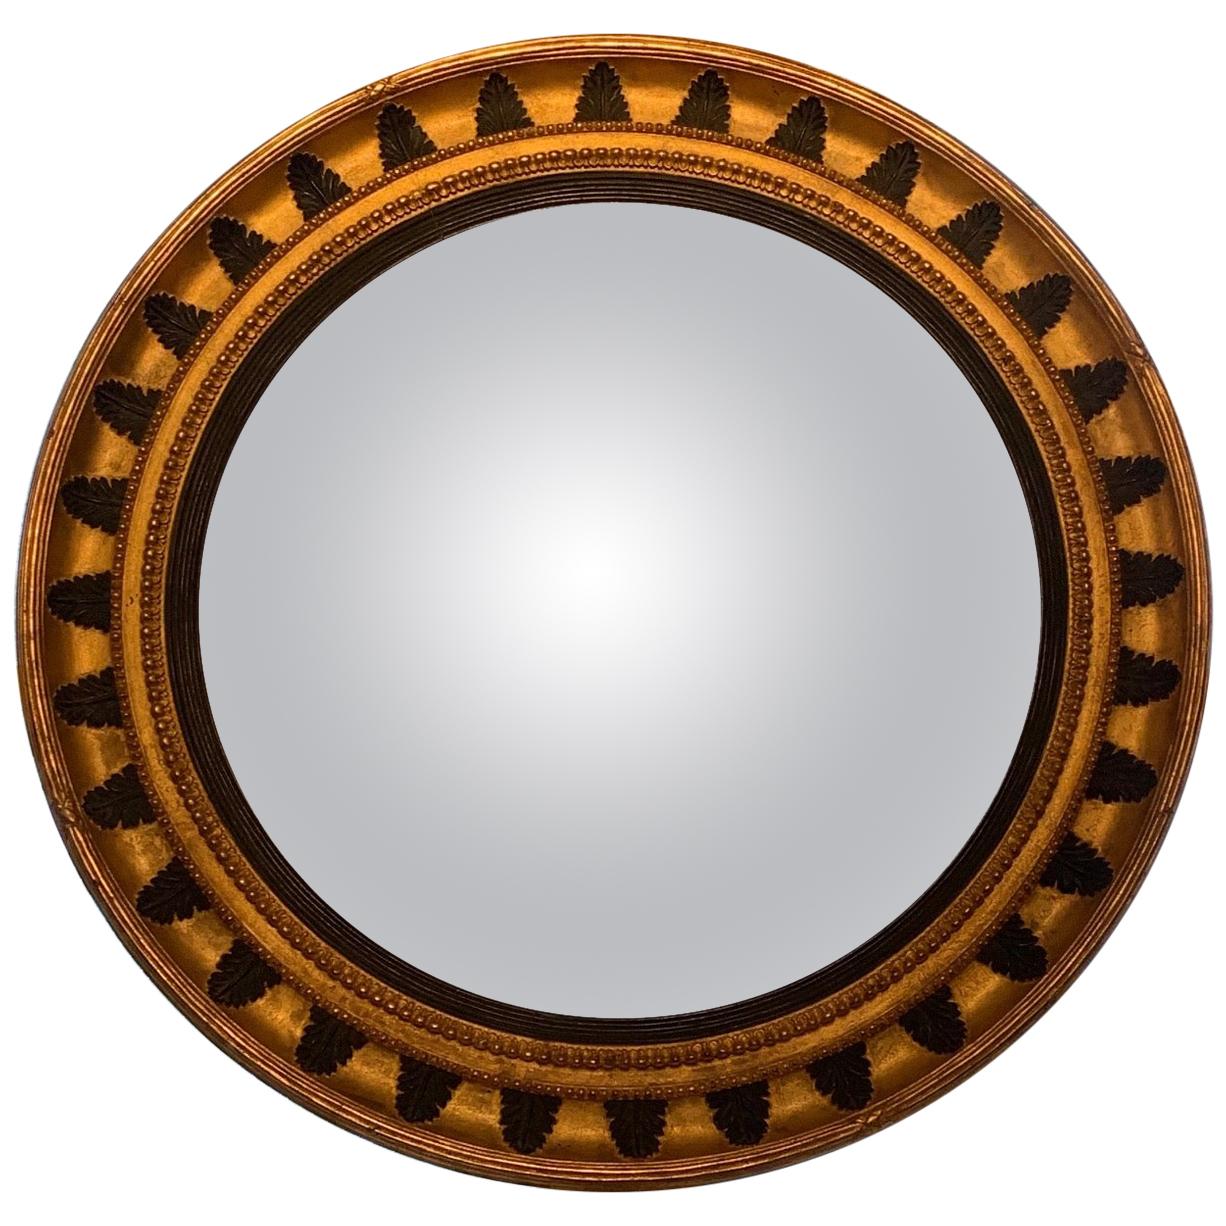 Very Striking Large Round Regency Black and Gold Mirror